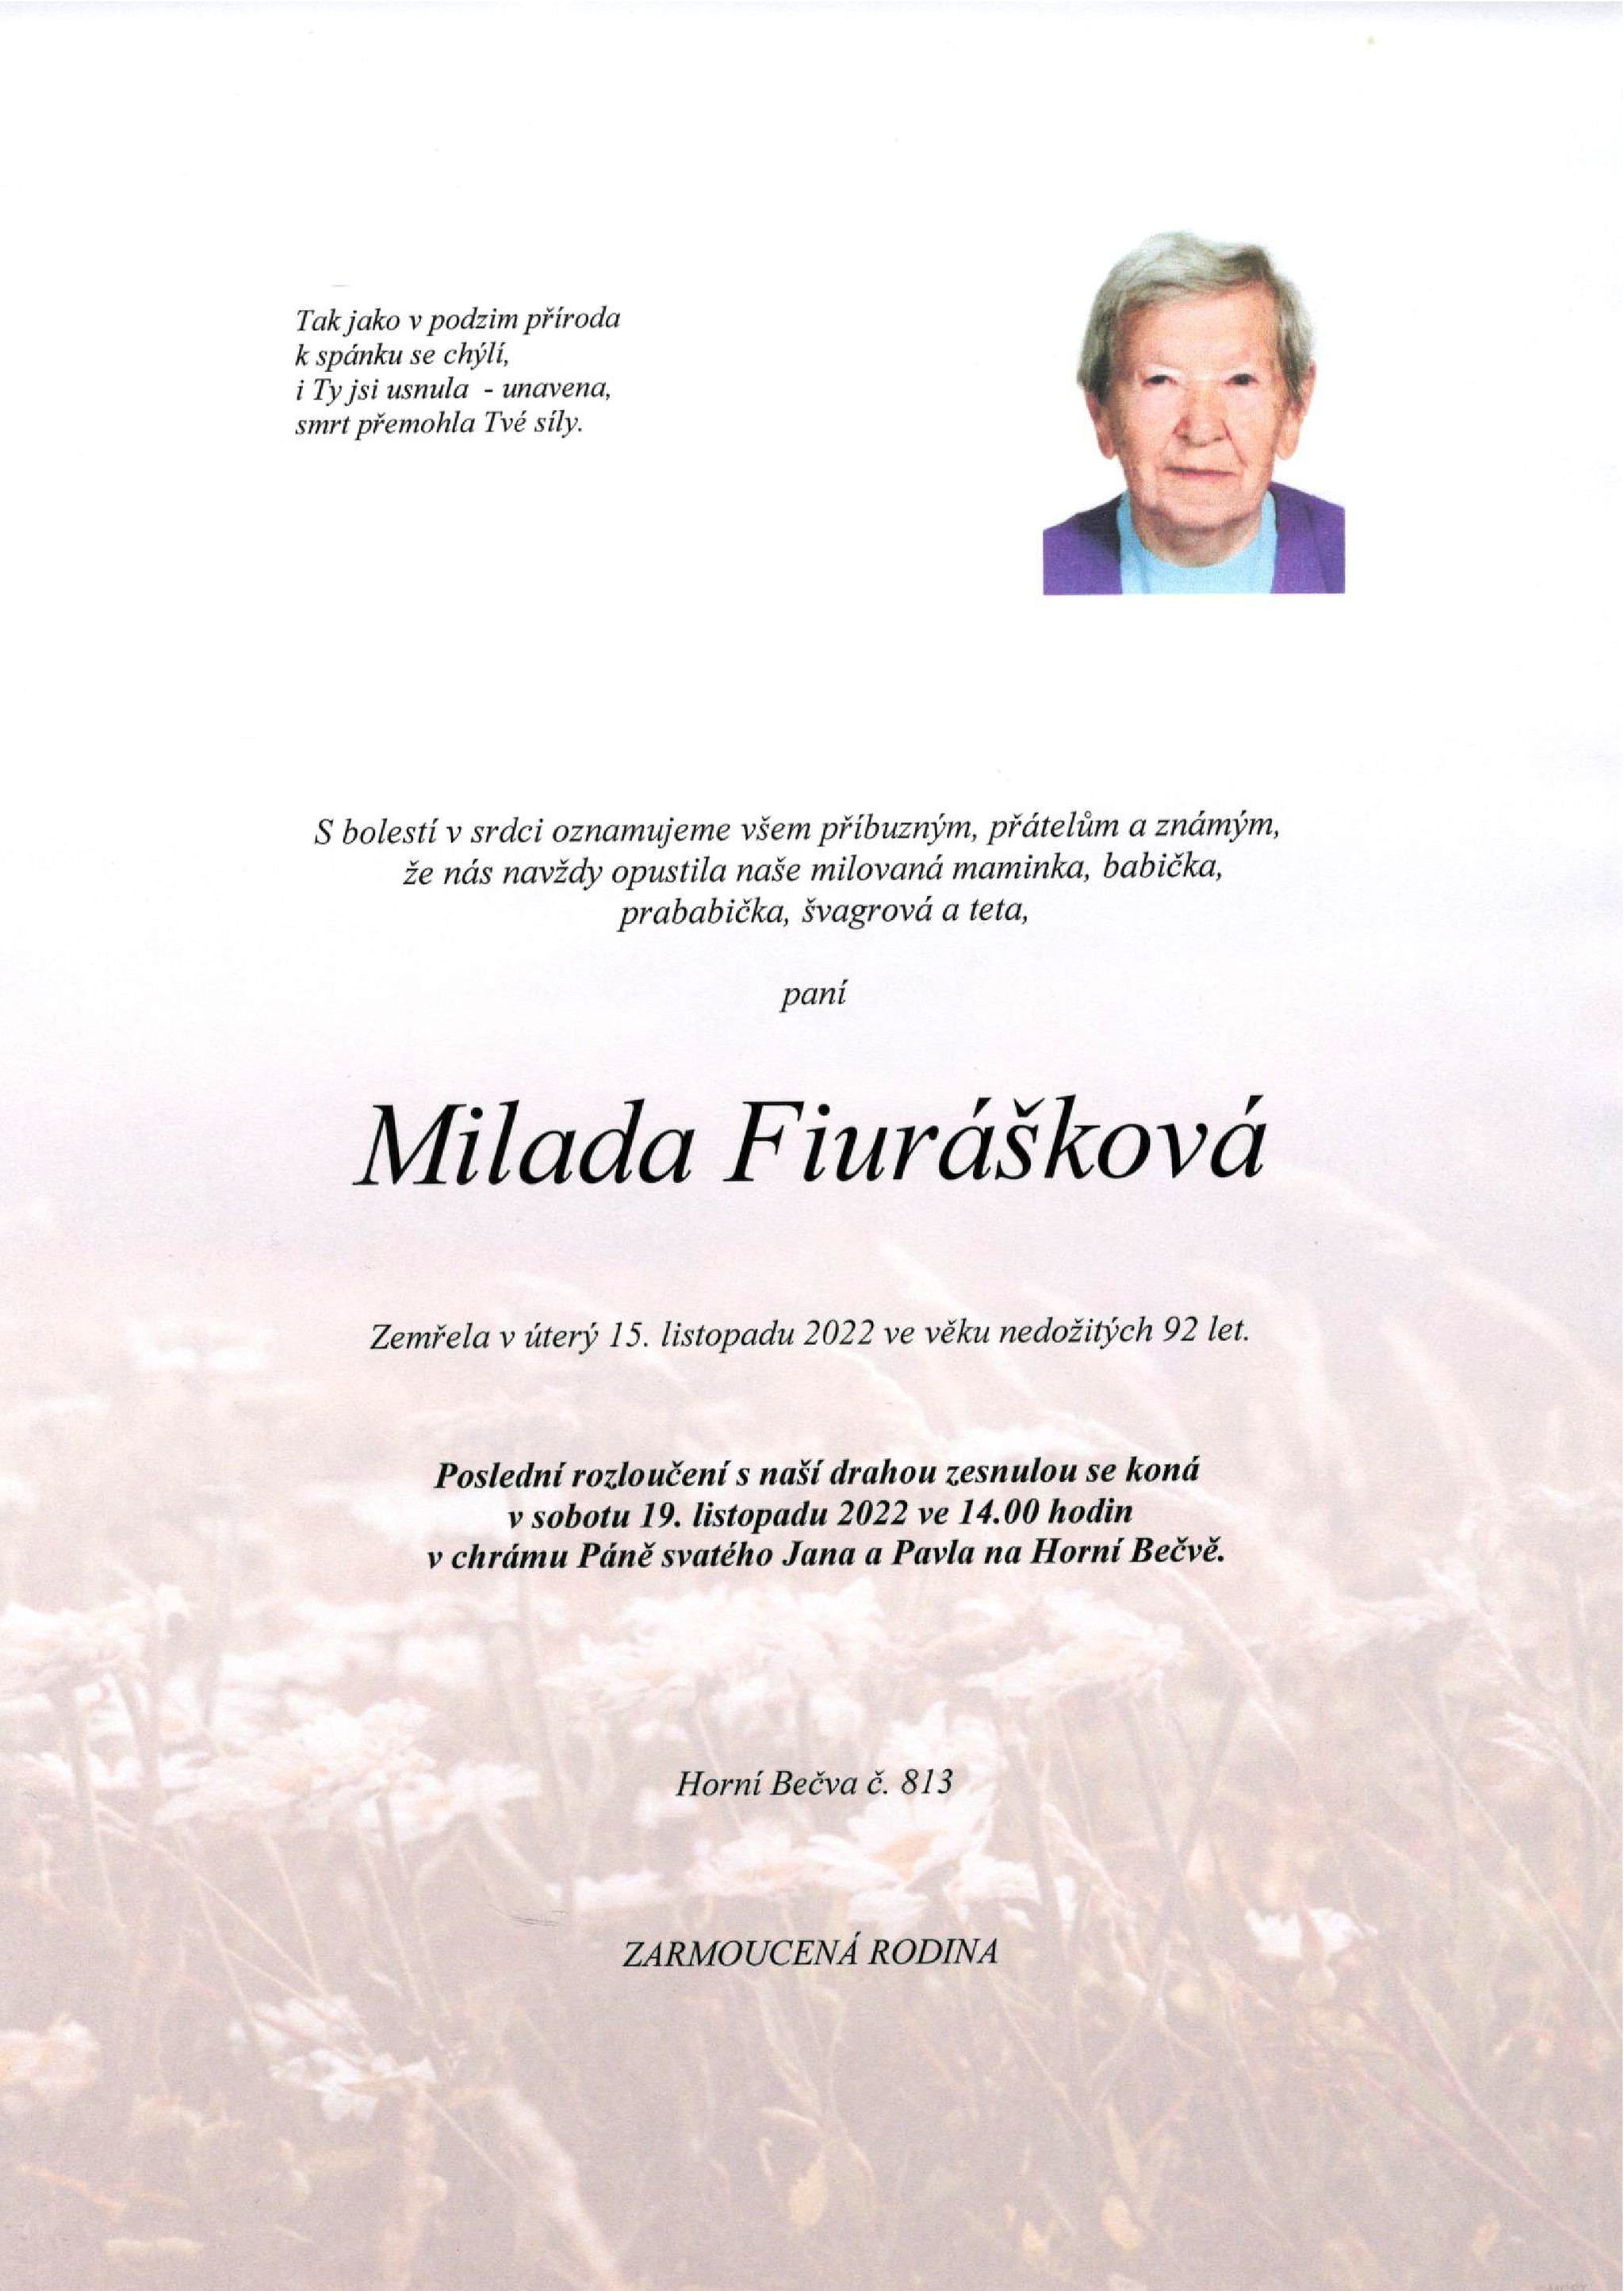 Milada Fiurášková